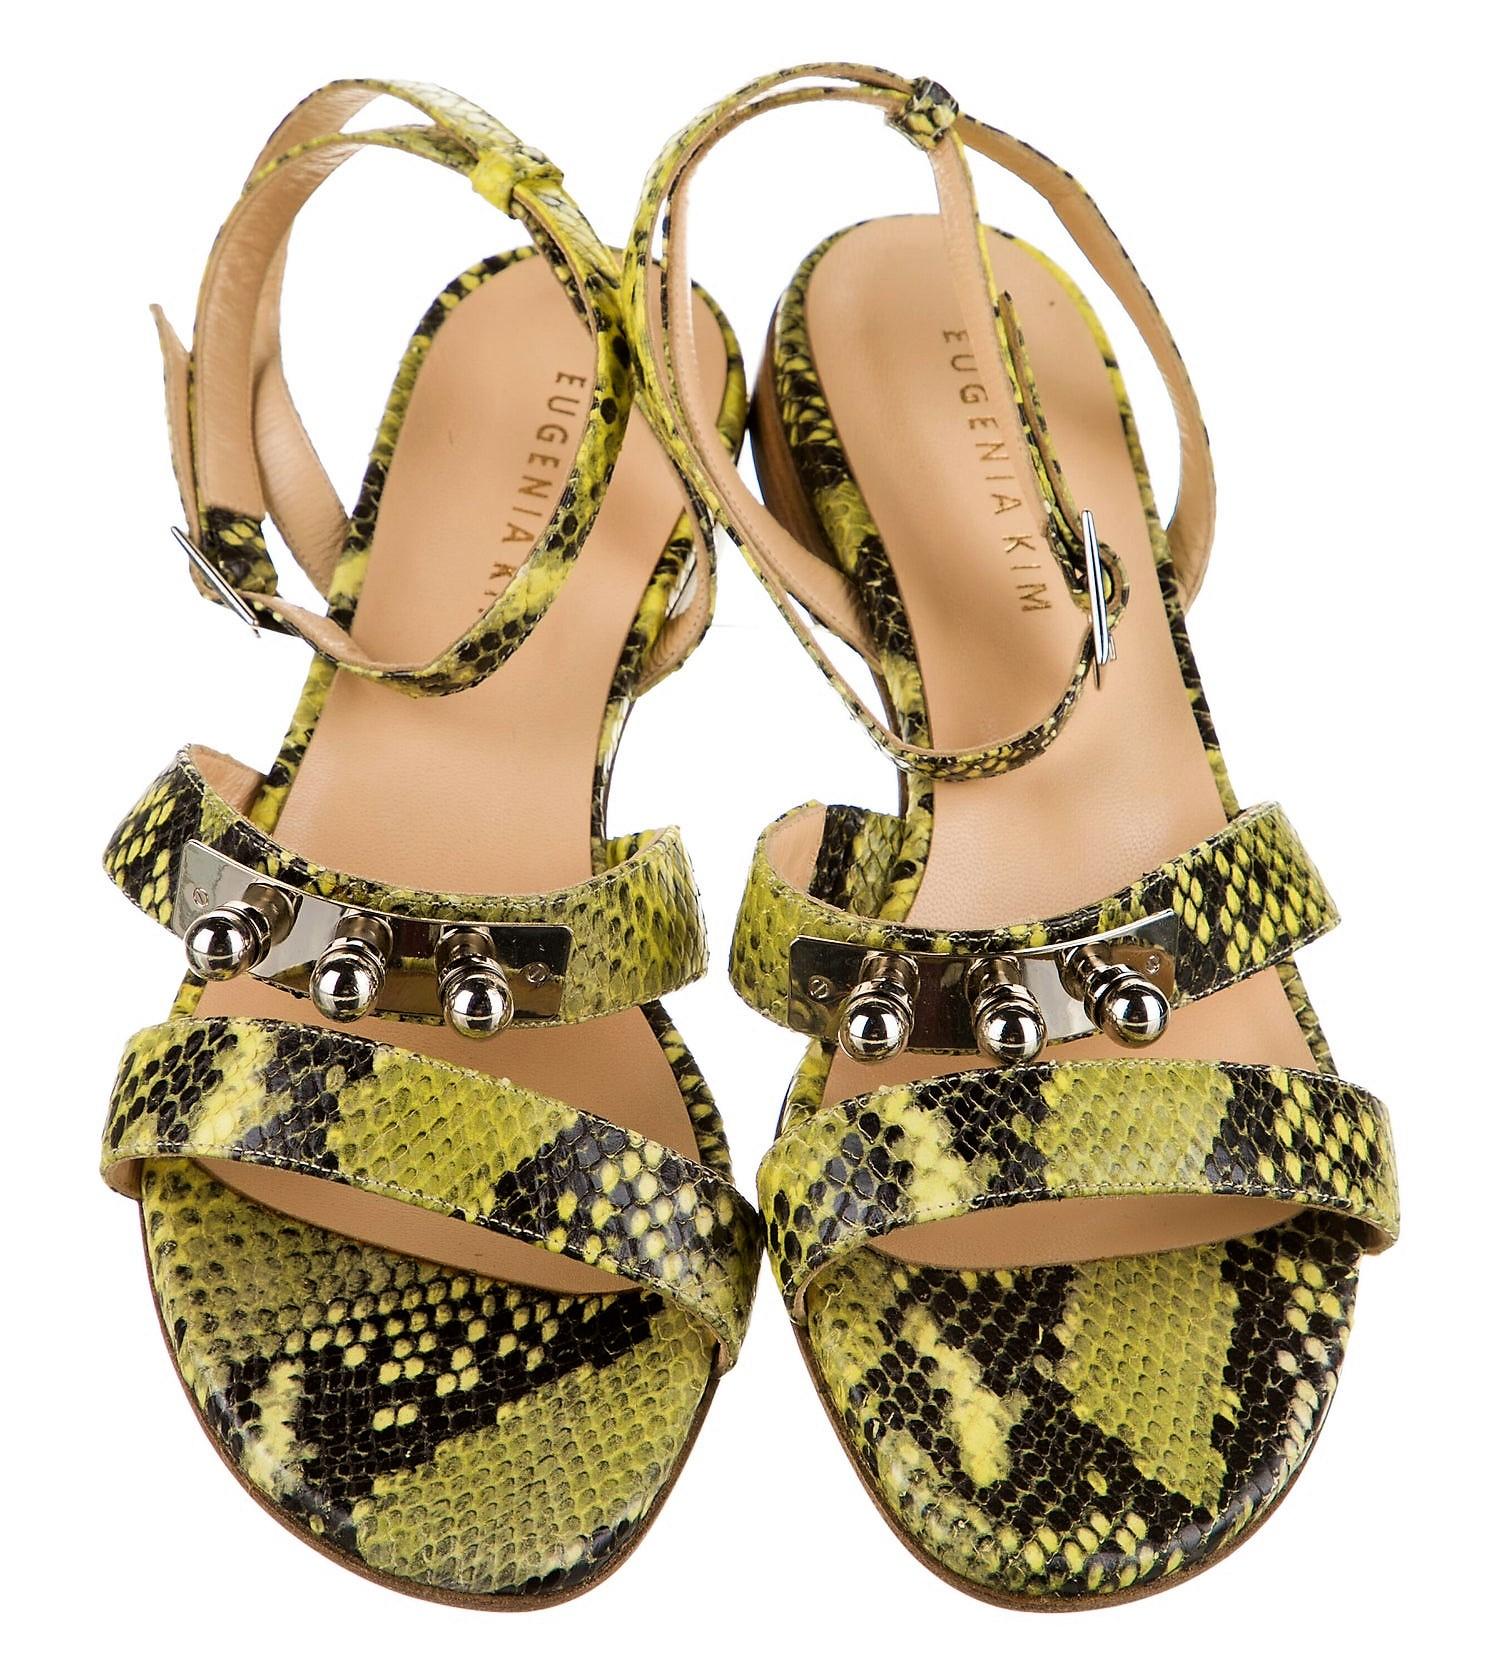 Beige New Eugenia Kim Yellow Python Sandals Flats Shoes Sz 39  U.S. 8.5